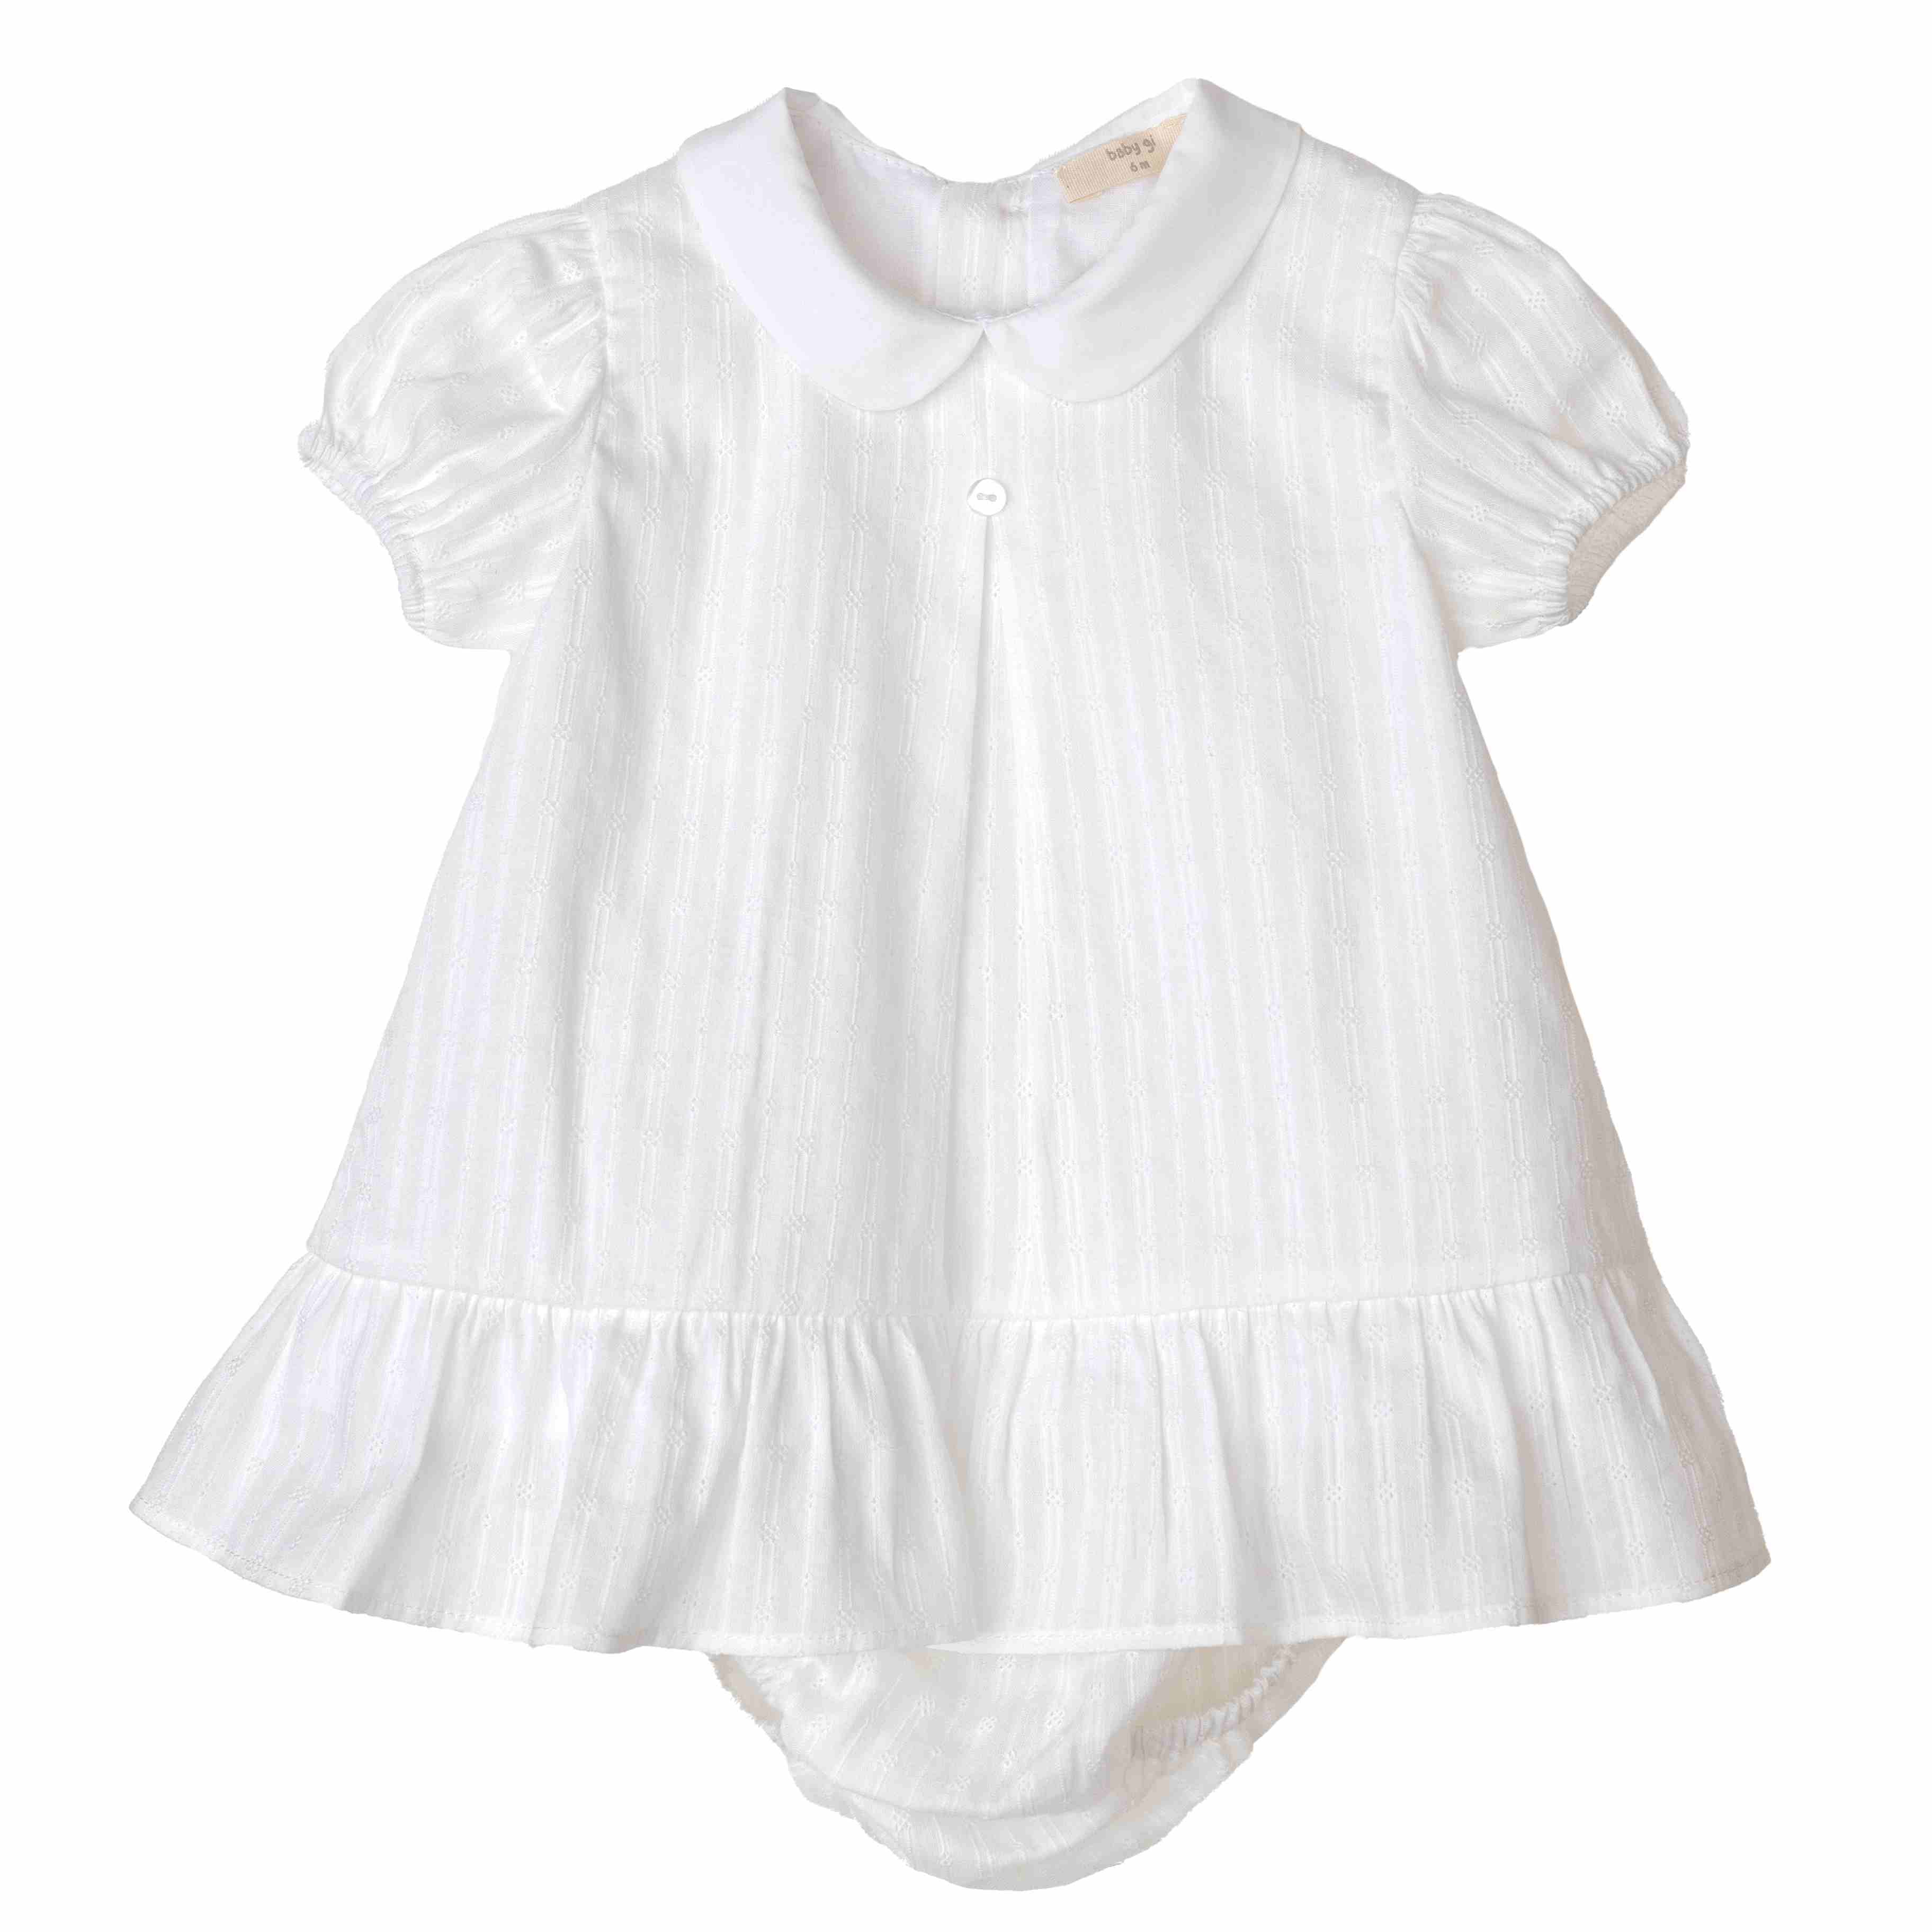 Baby Gi Ivory dress with panties